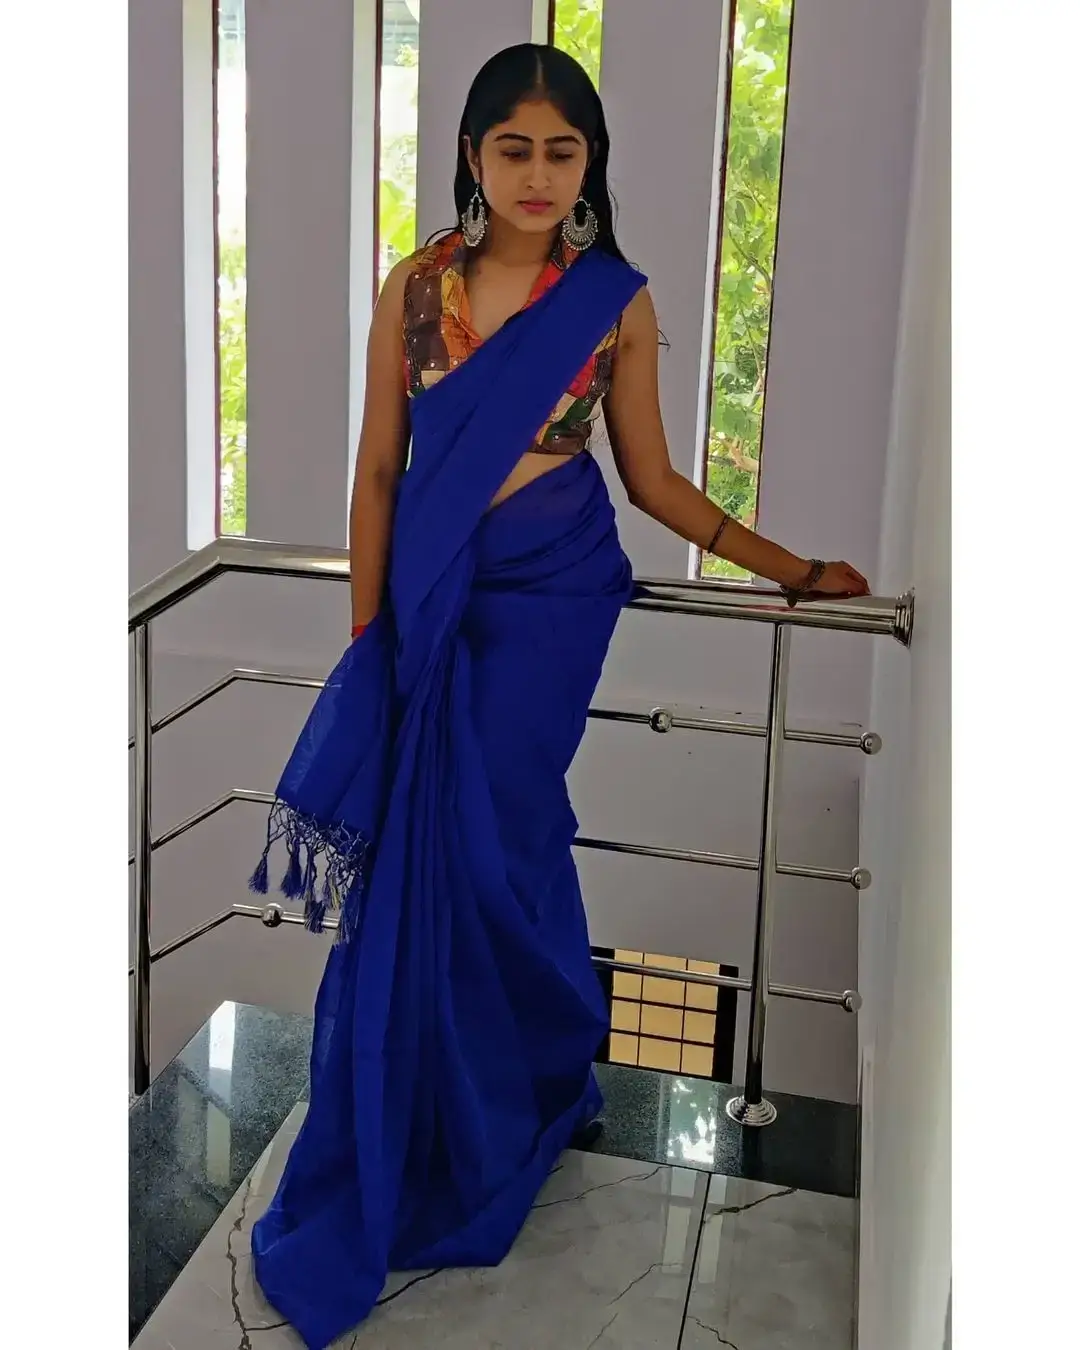 INDIAN TV ACTRESS KRISHNA PRIYA NAIR IN BLUE SAREE 7